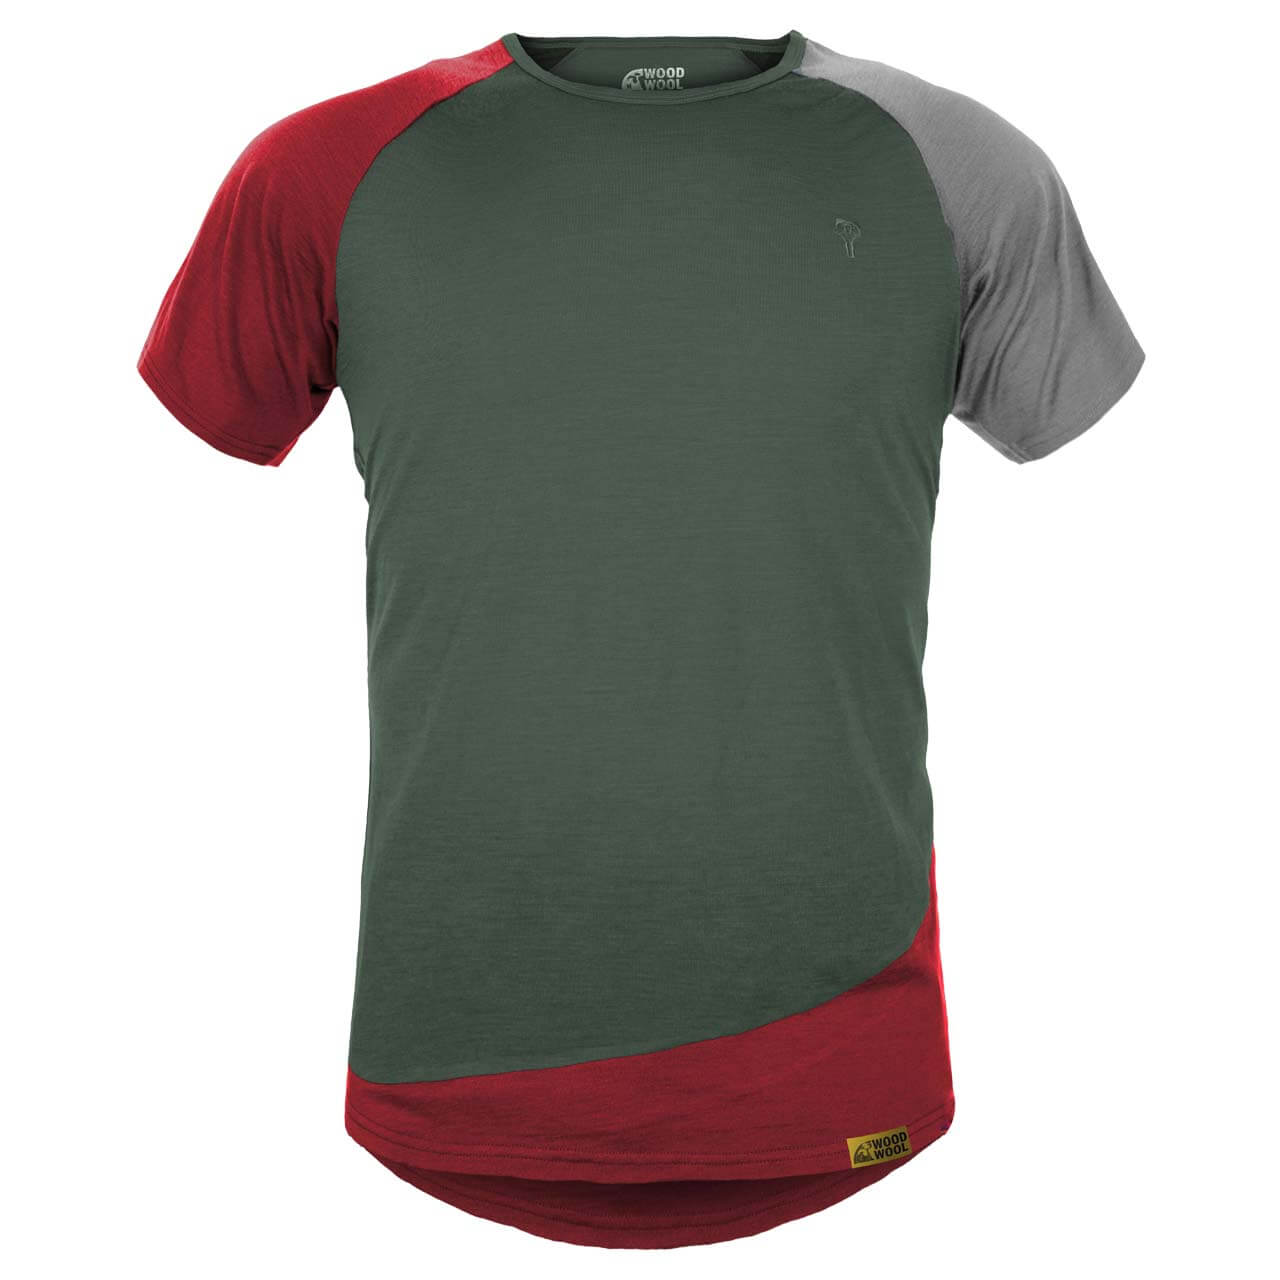 Grüezi Bag WoodWool T-Shirt Mr. Kirk - Bayberry Green, S von Grüezi Bag